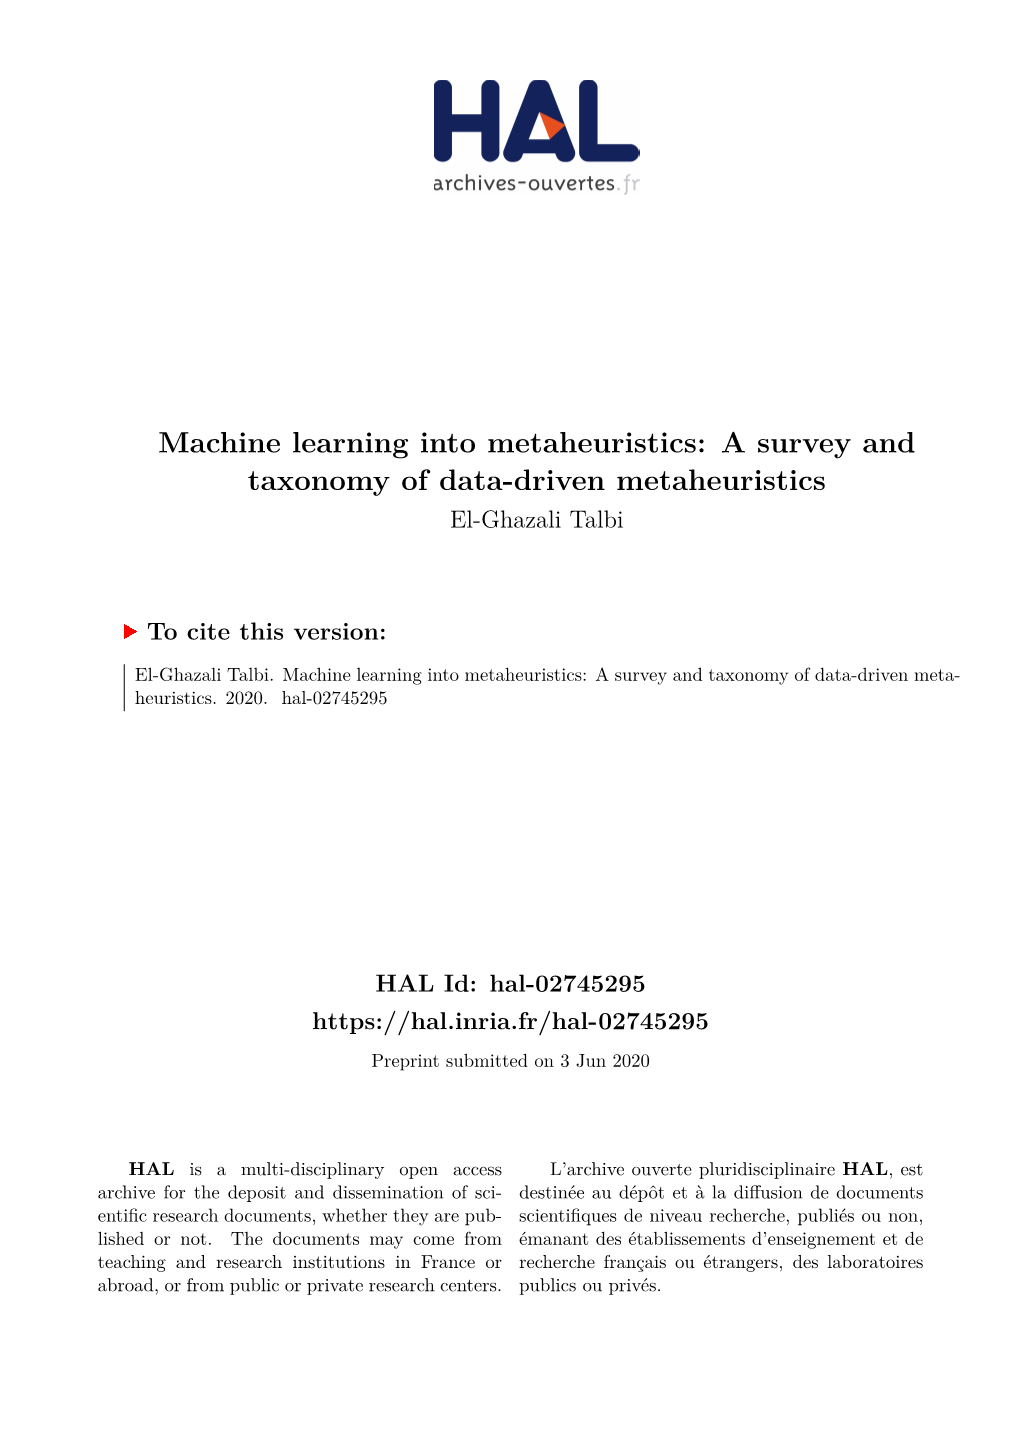 Machine Learning Into Metaheuristics: a Survey and Taxonomy of Data-Driven Metaheuristics El-Ghazali Talbi